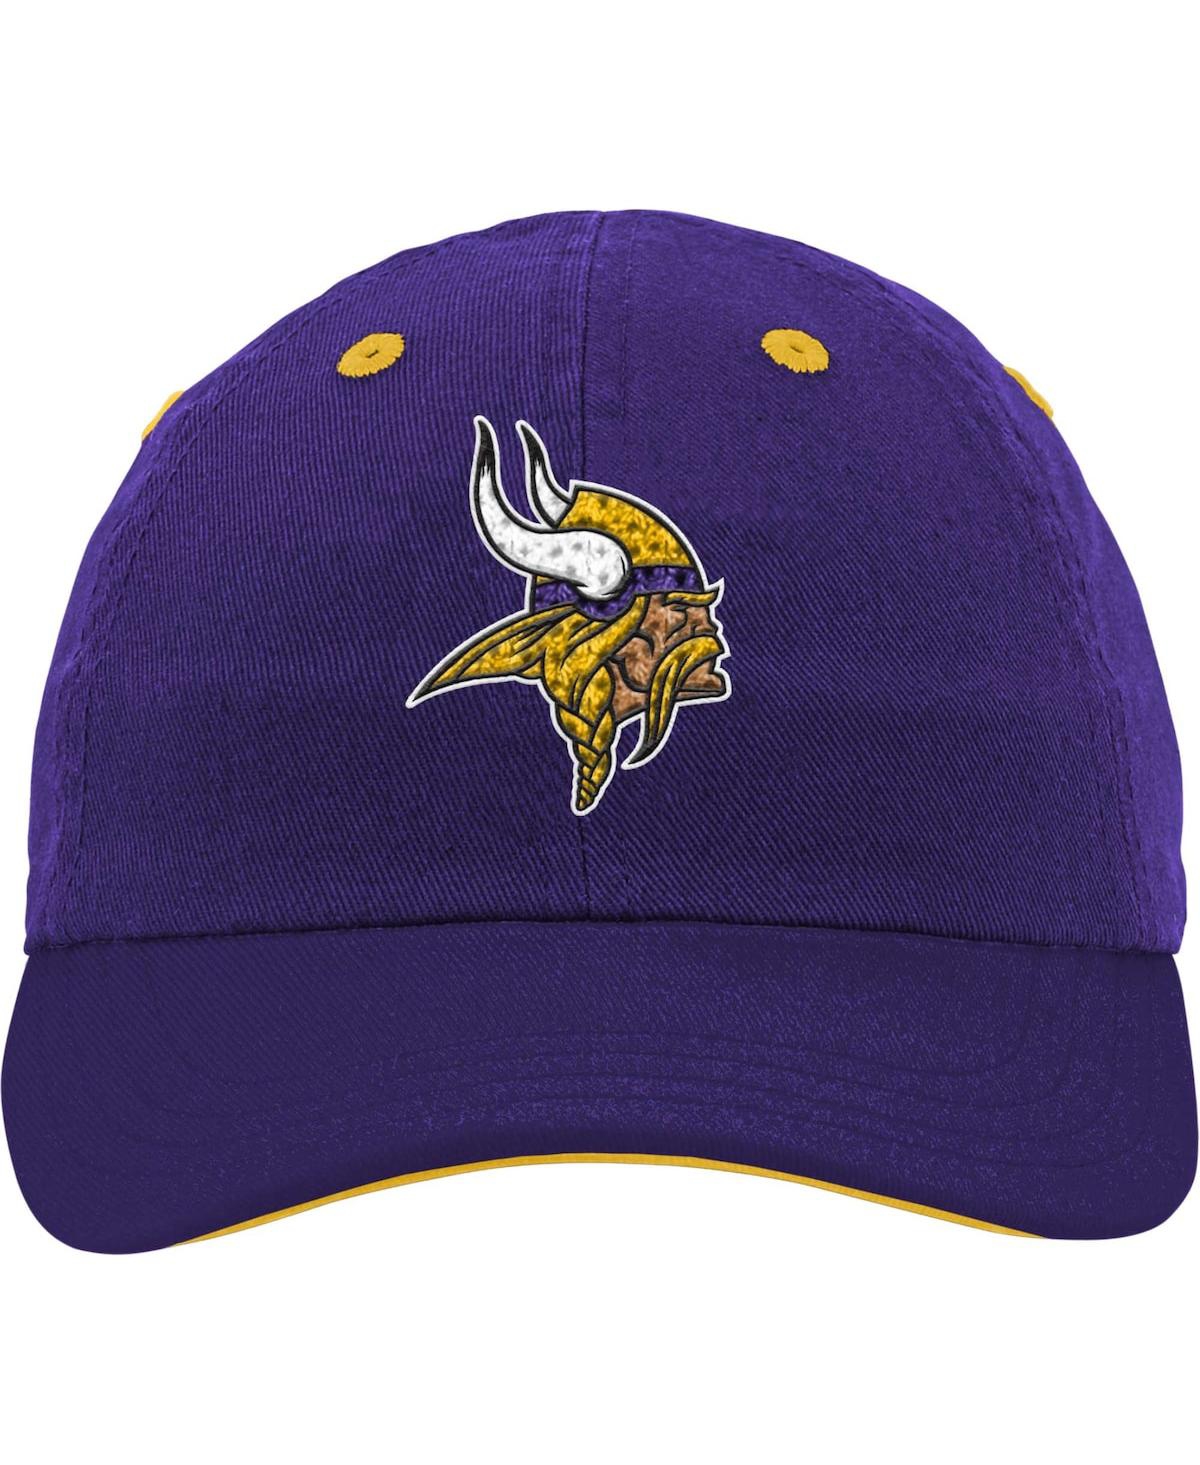 Shop Outerstuff Boys And Girls Infant Purple Minnesota Vikings Team Slouch Flex Hat